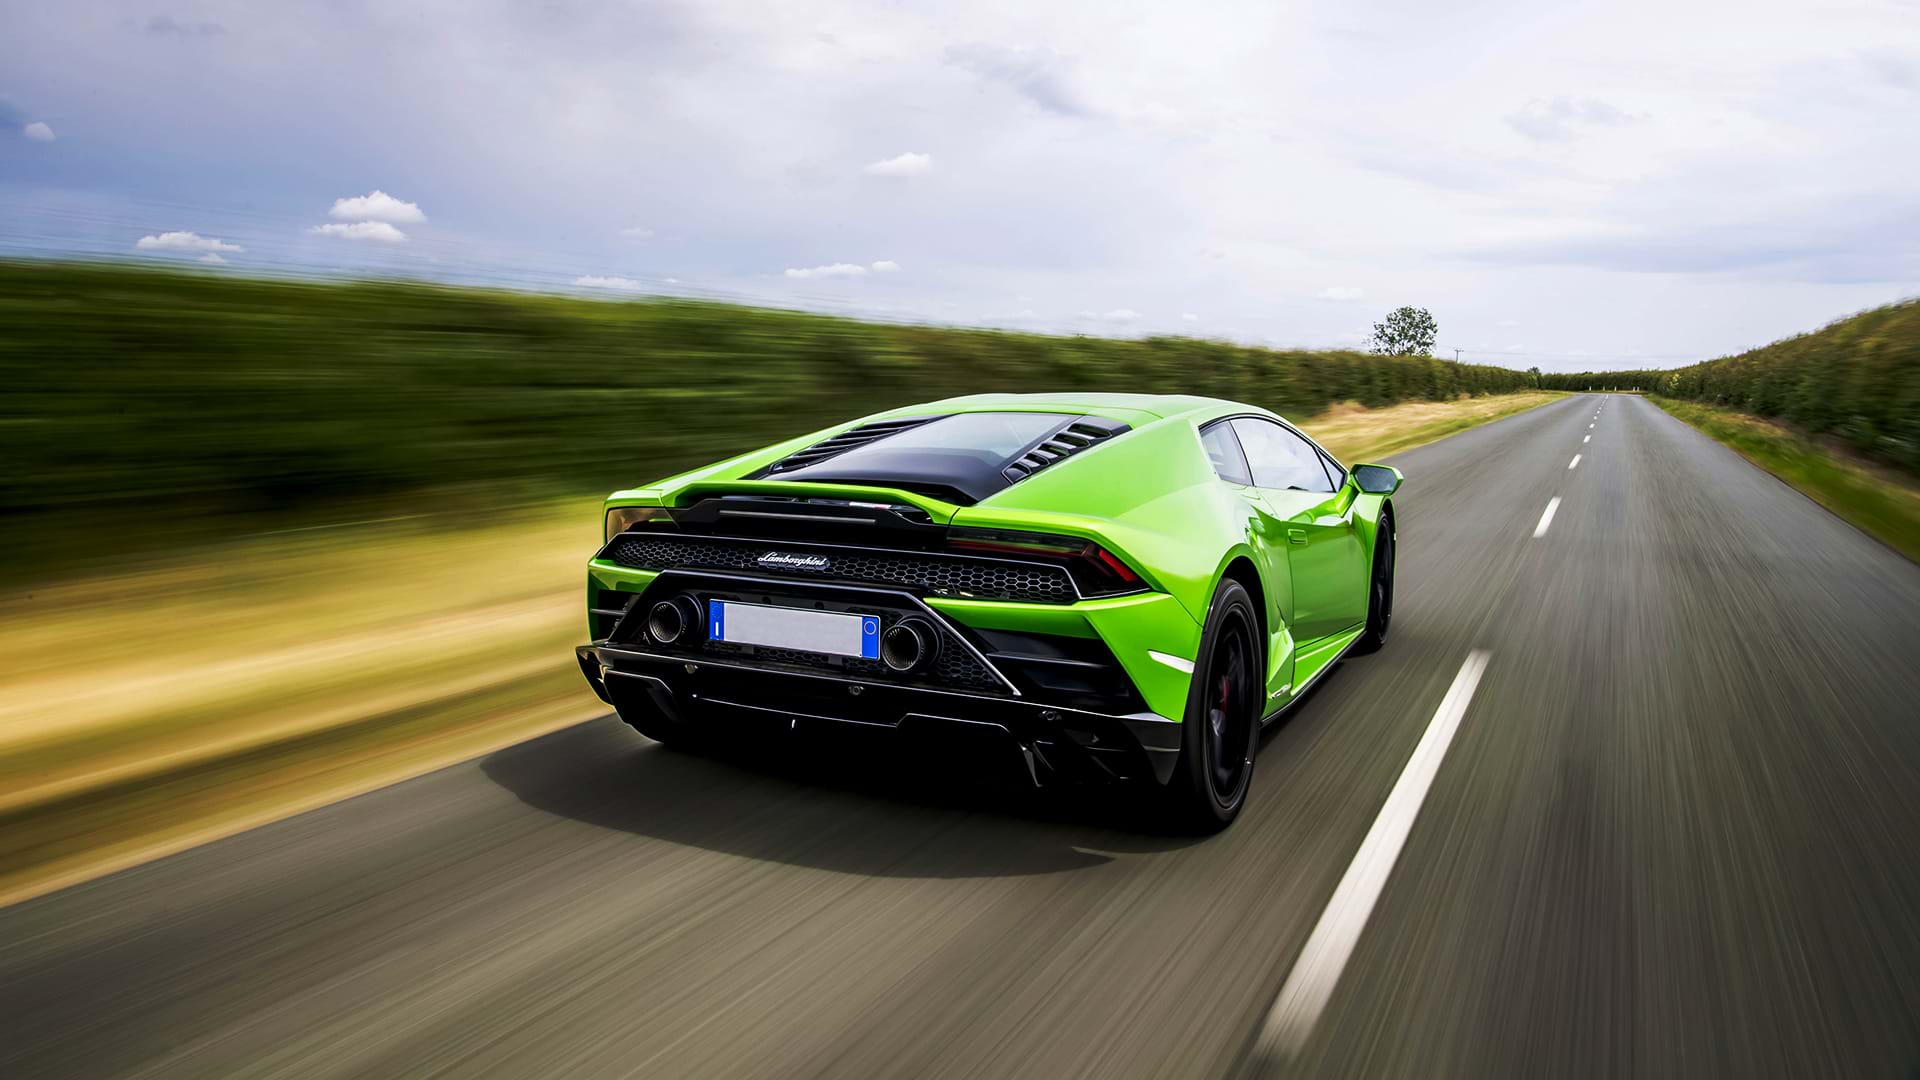 Bright green Lamborghini Huracán Evo speeding down a country road on a sunny day.